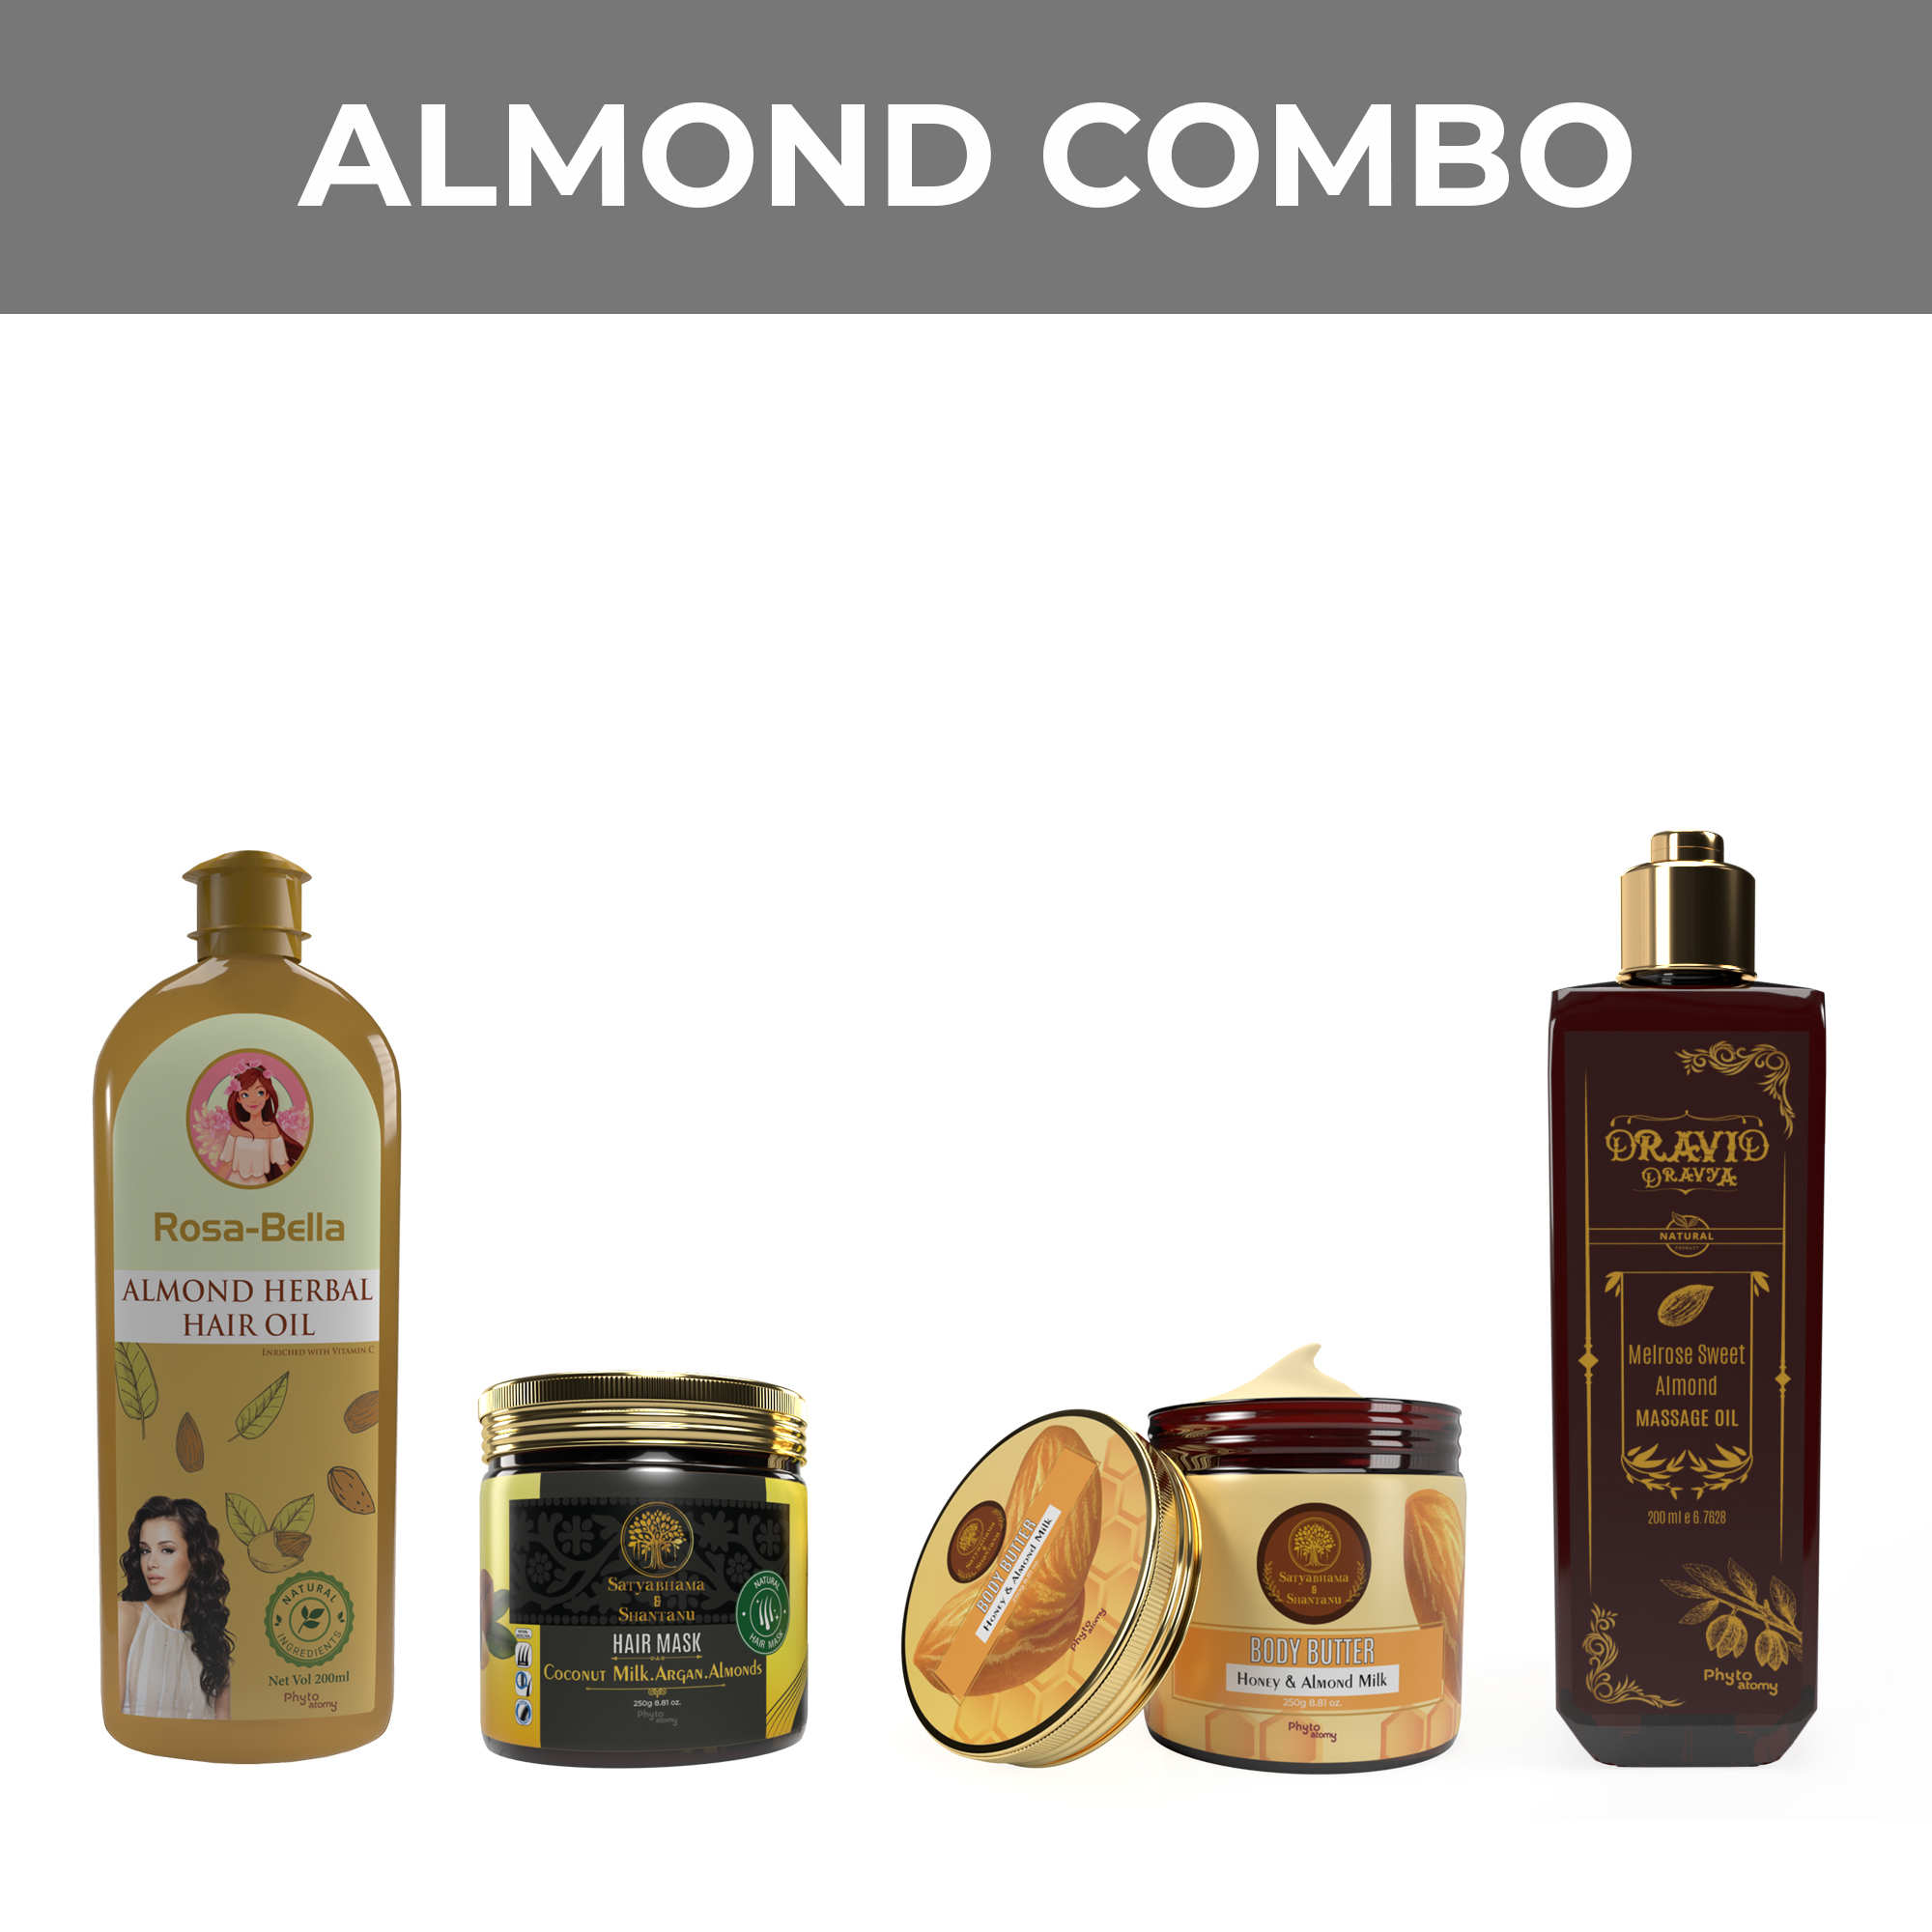 Almond Combo